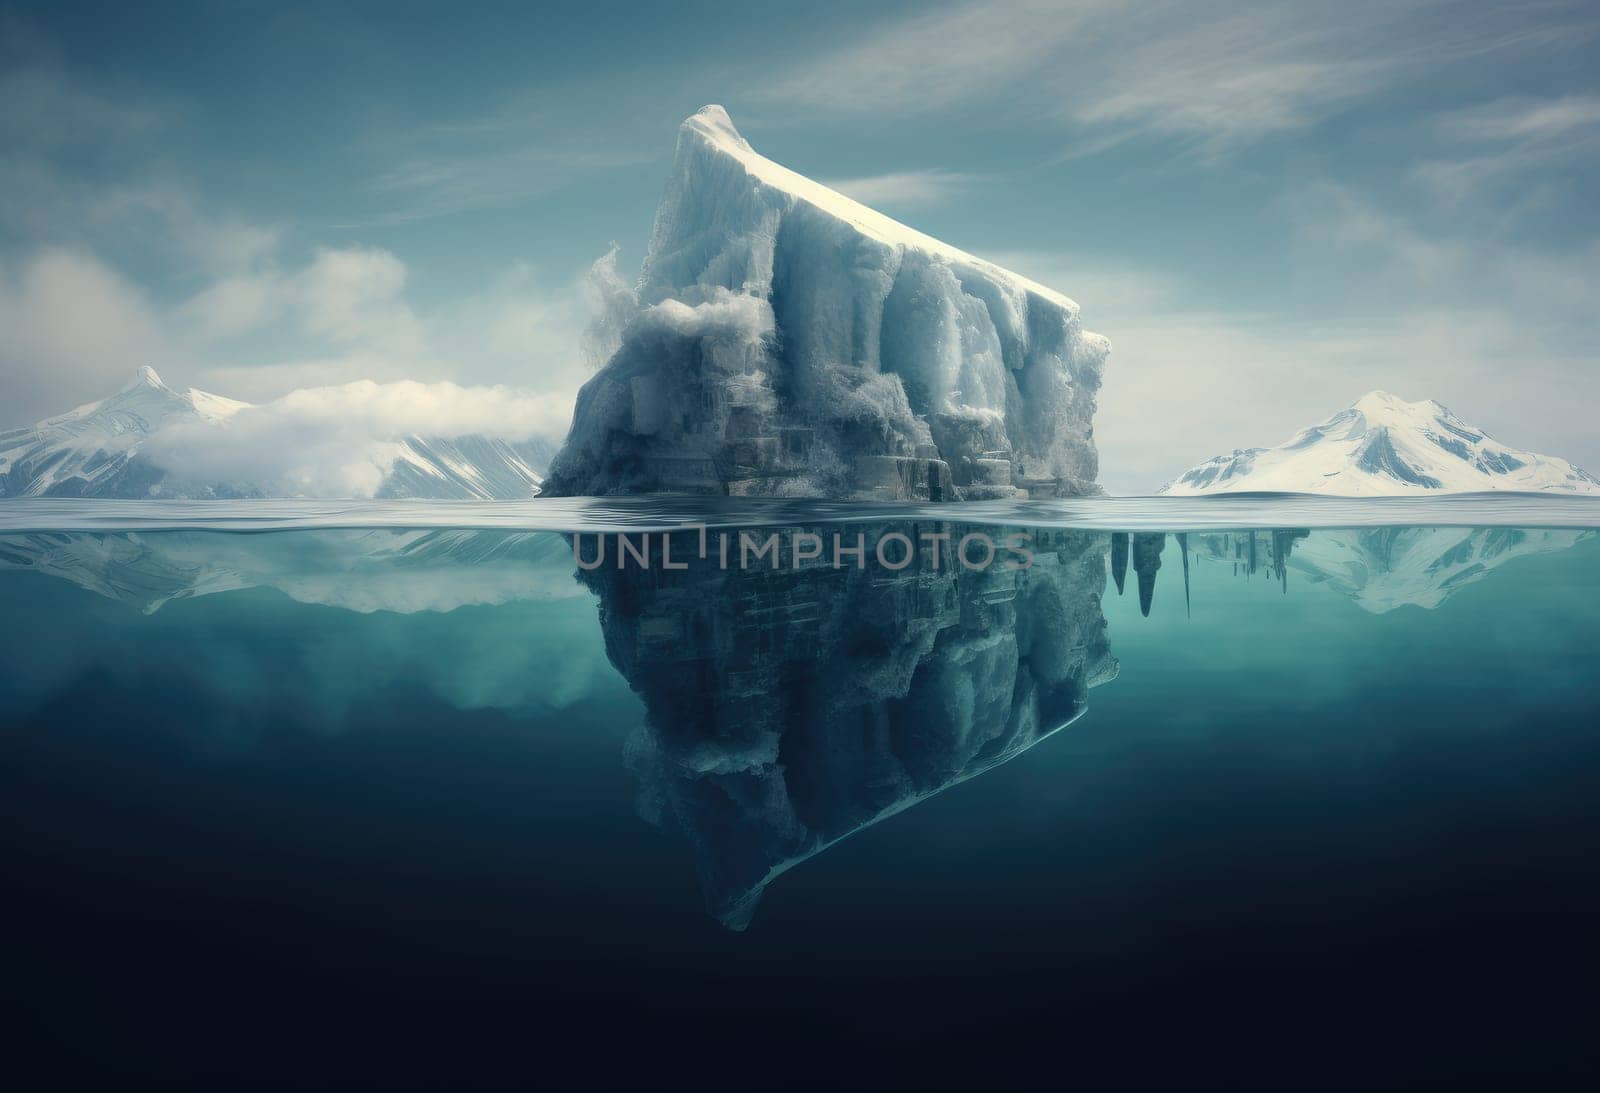 A large iceberg in the sea. Dramatic scene